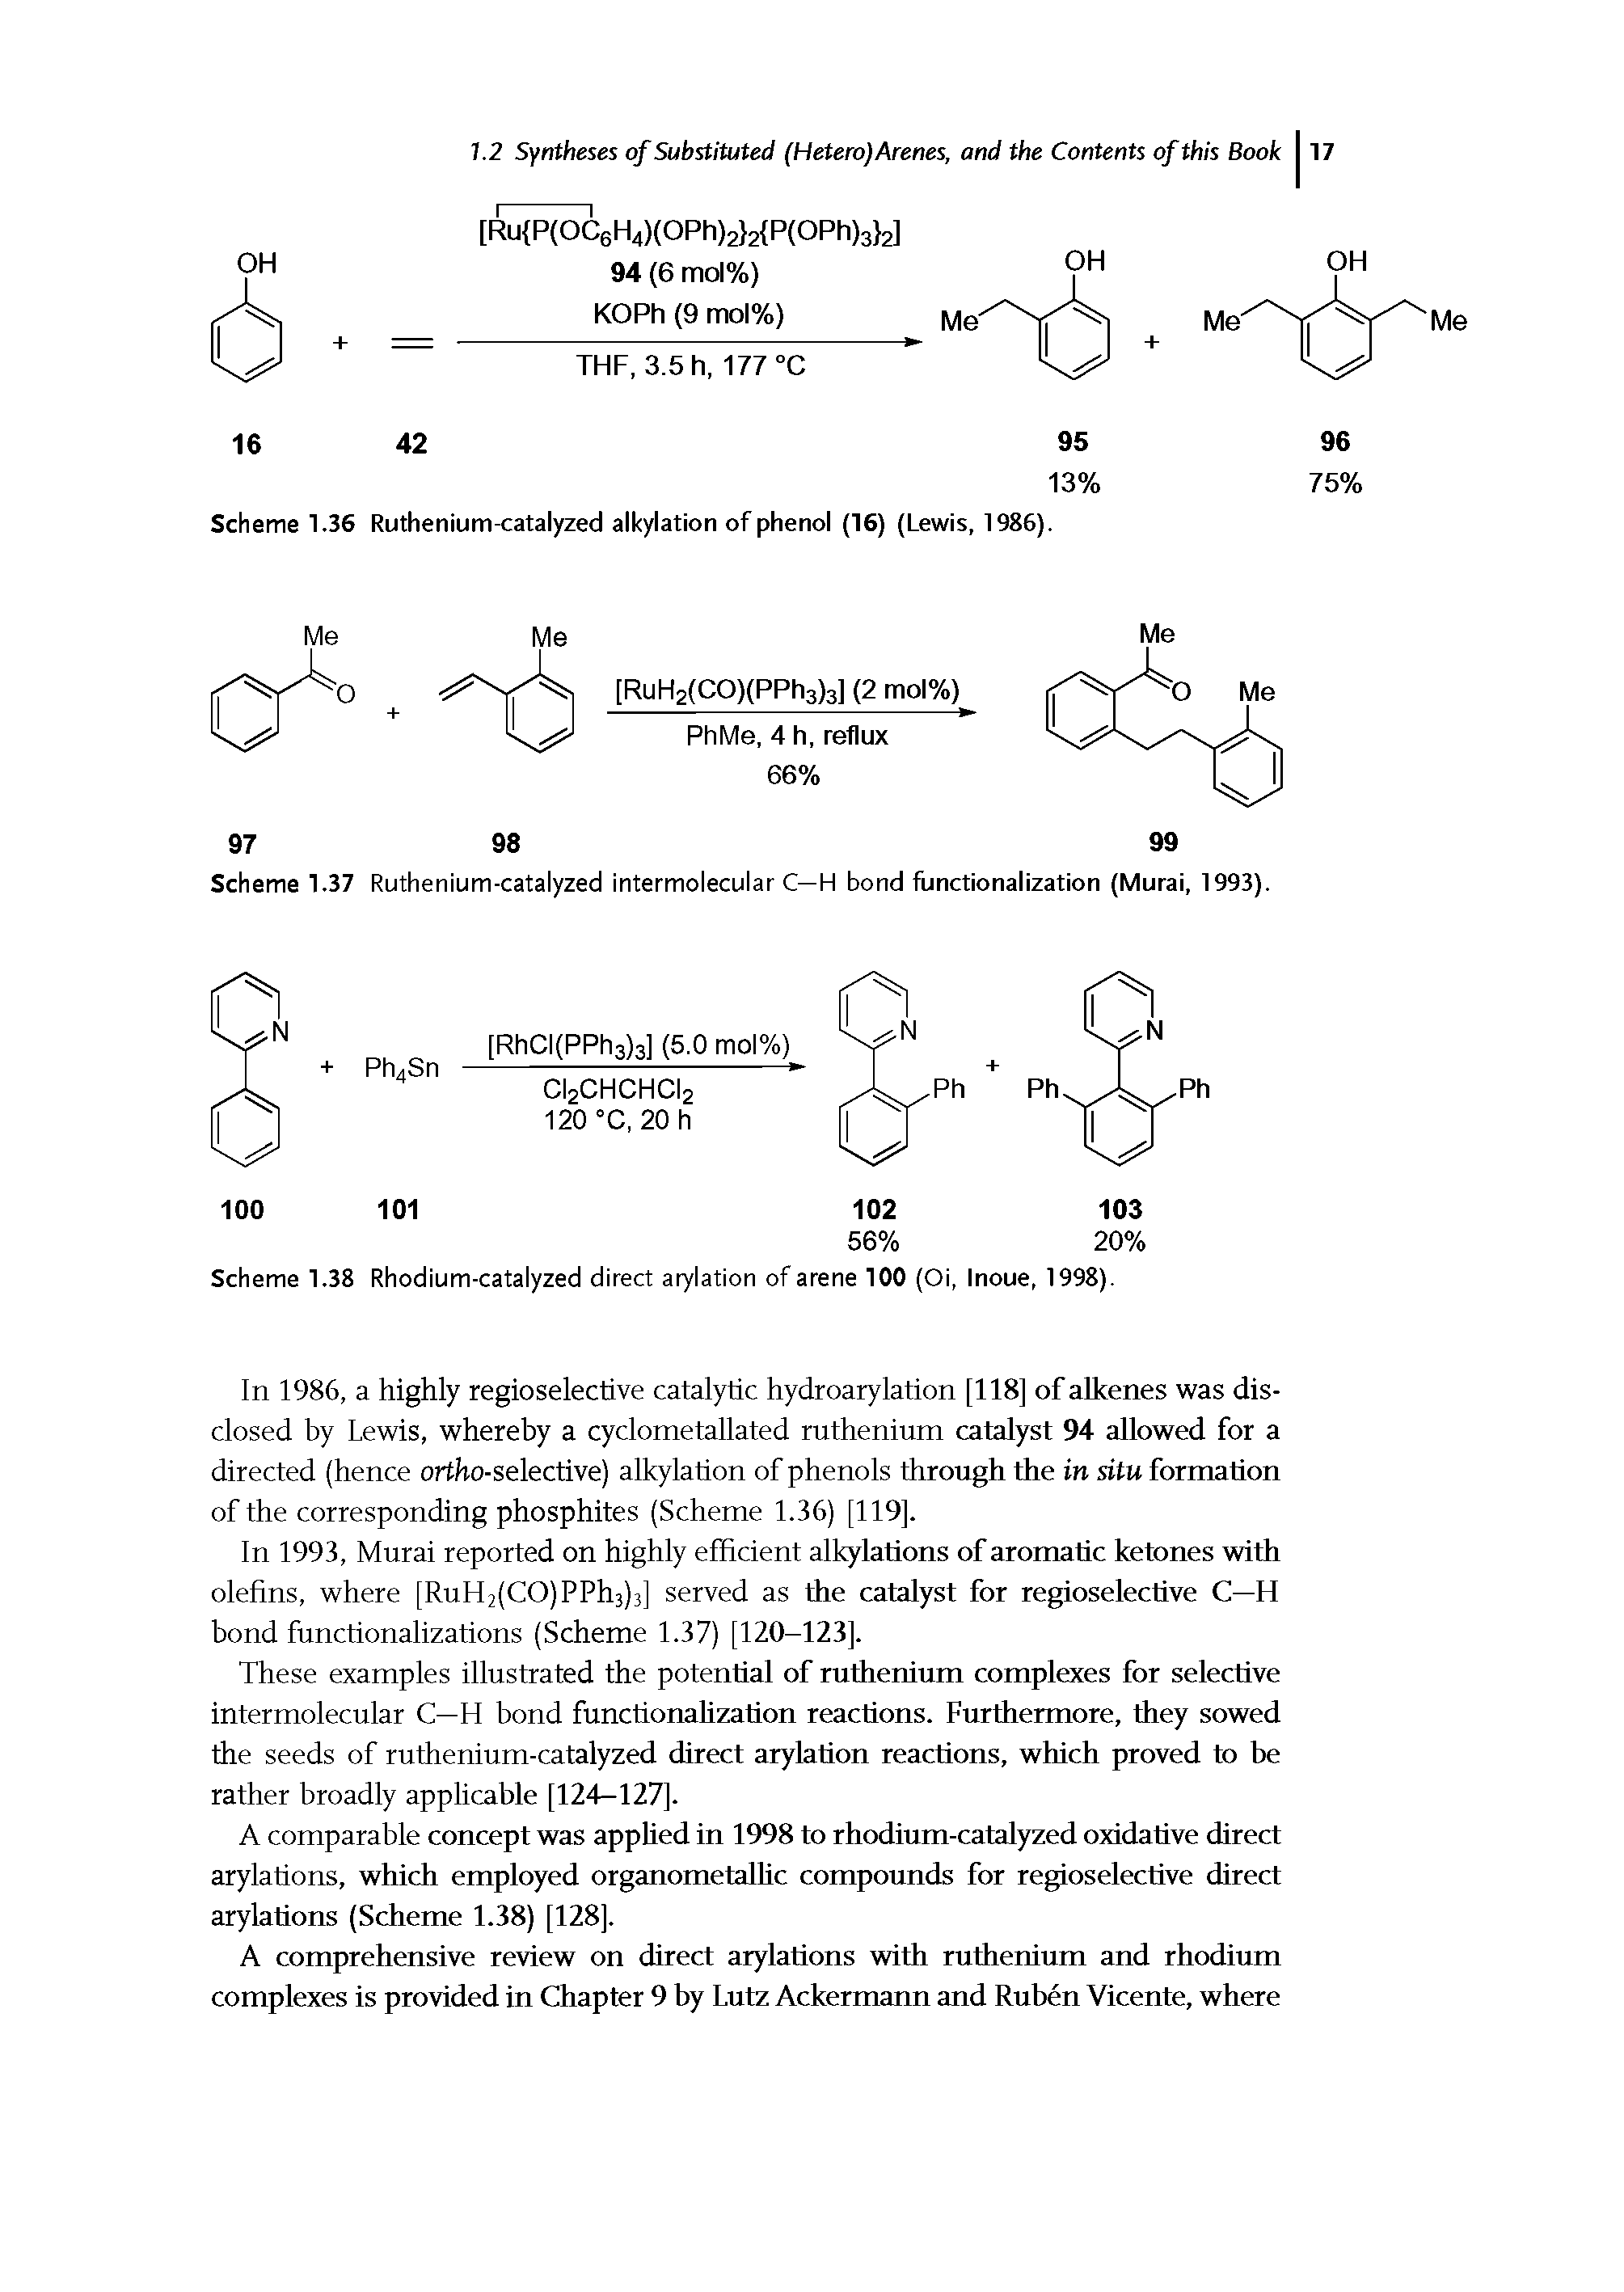 Scheme 1.38 Rhodium-catalyzed direct arylation of arene 100 (Oi, Inoue, 1998).